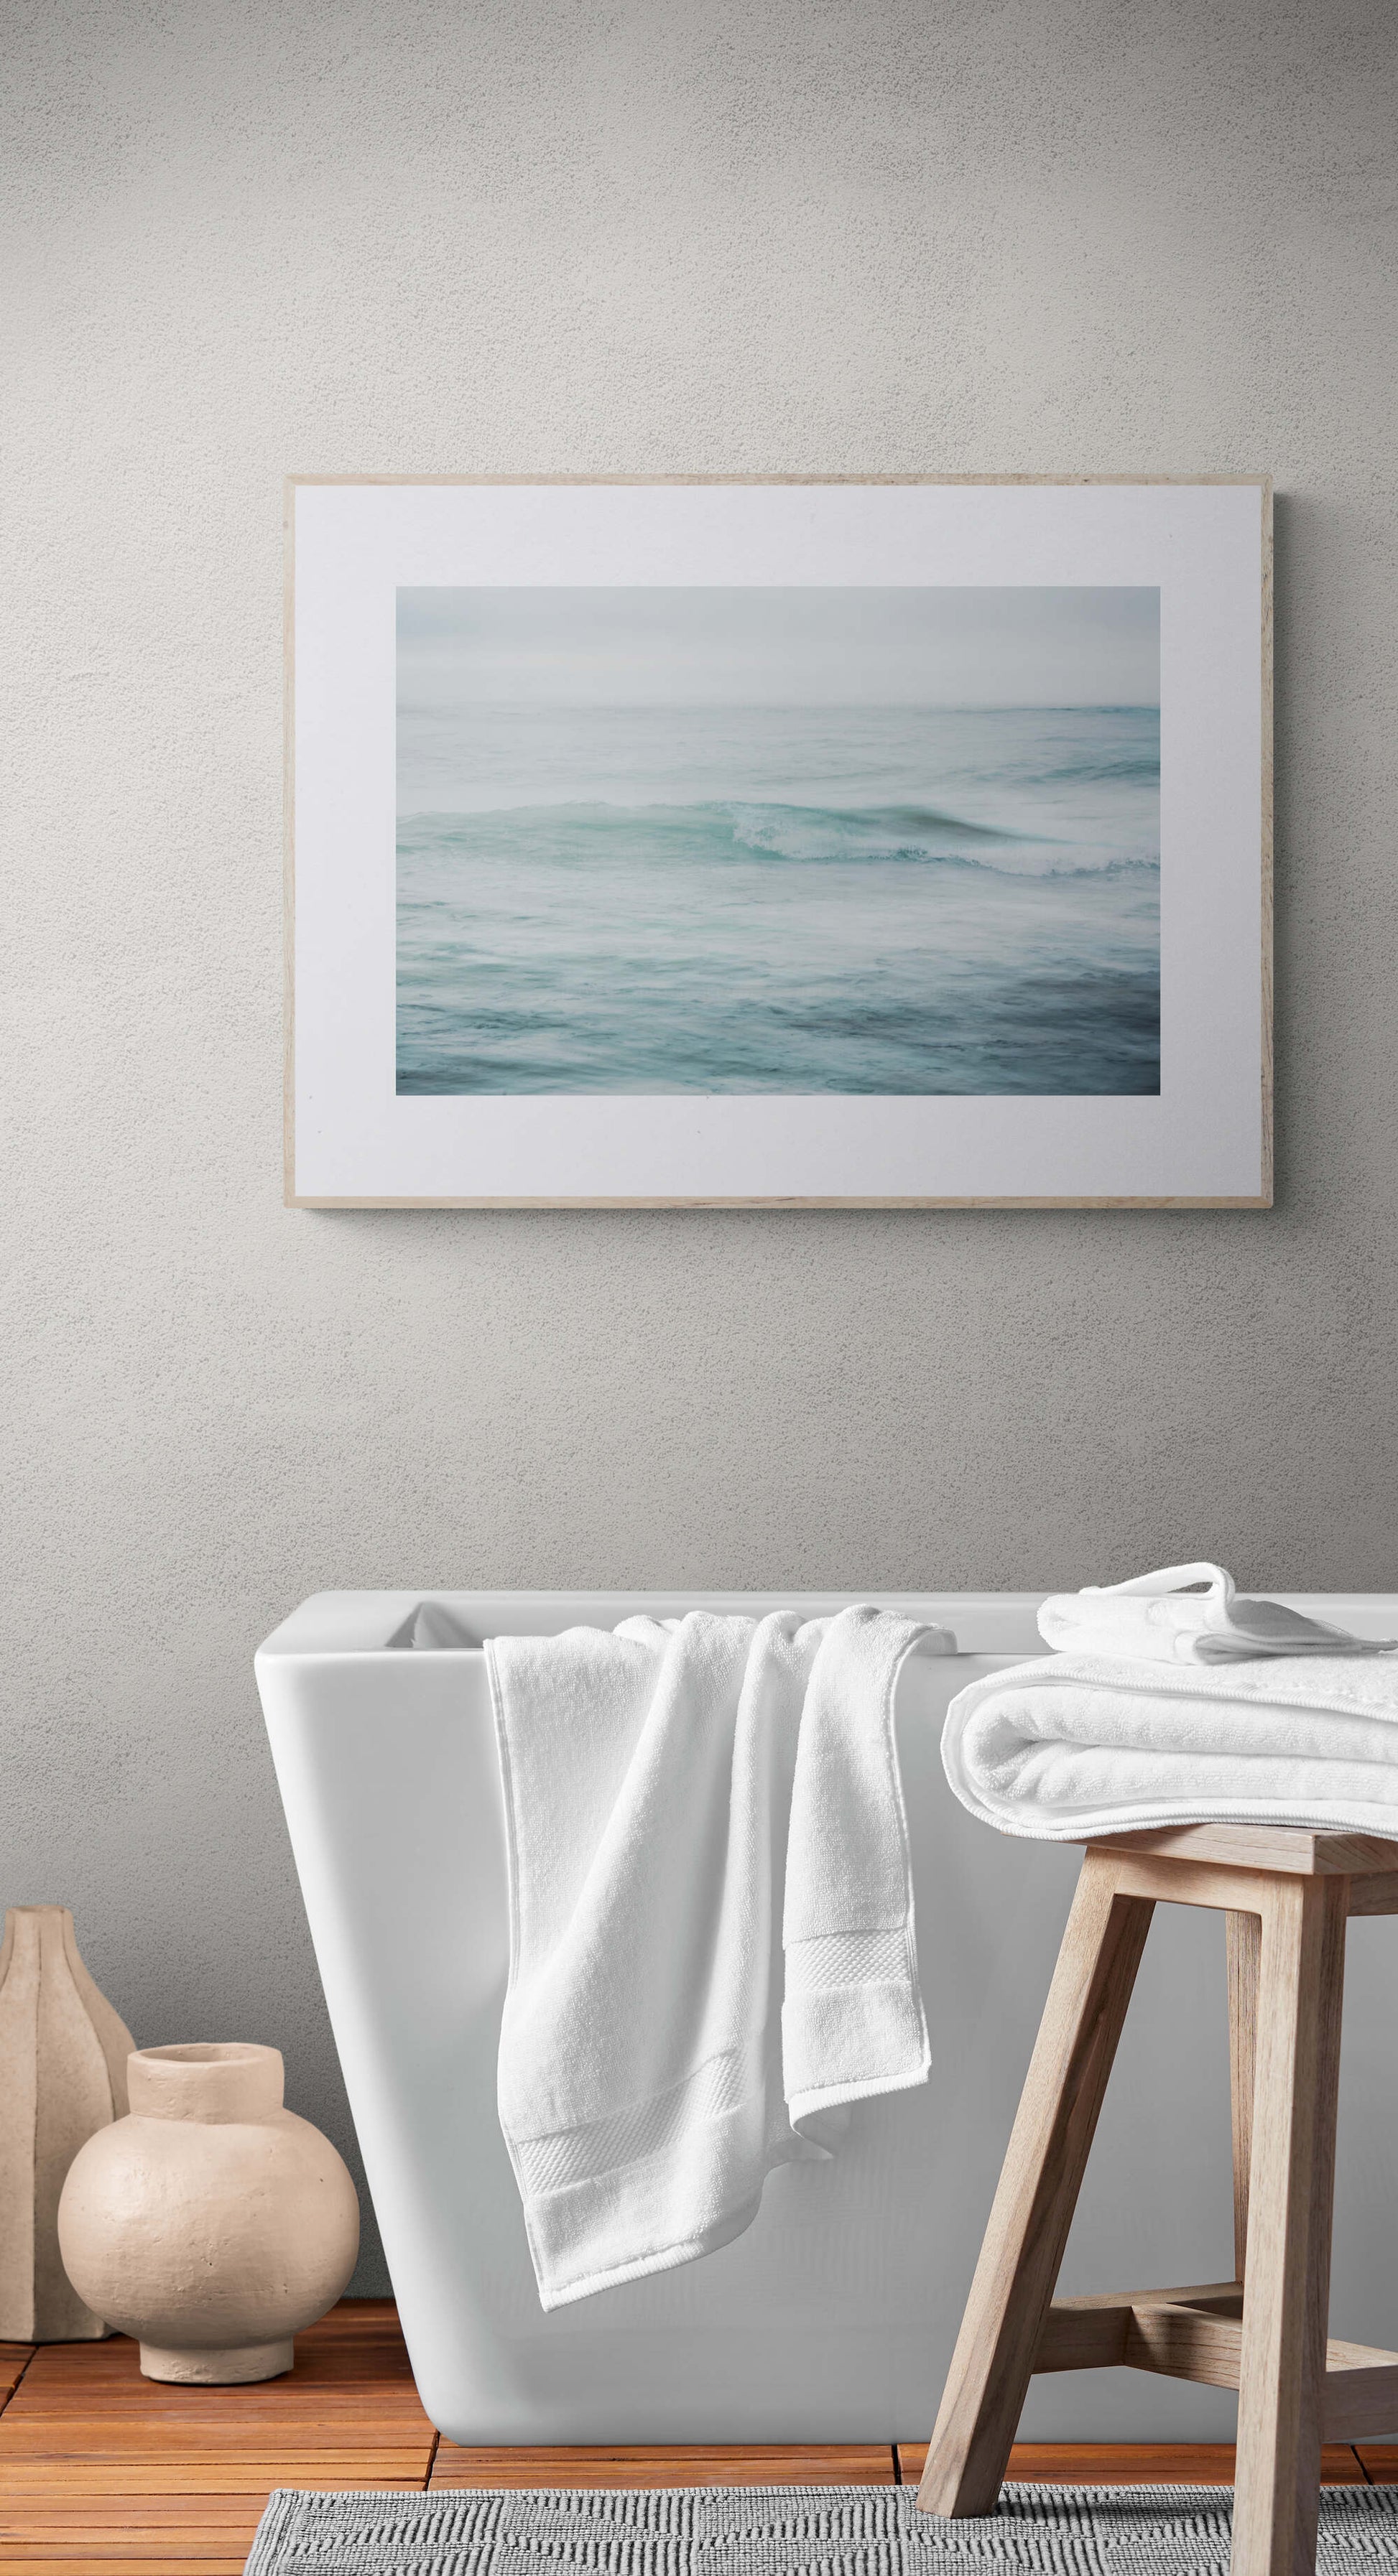 Photograph of Ocean Wave as Wall Art in a Bathroom